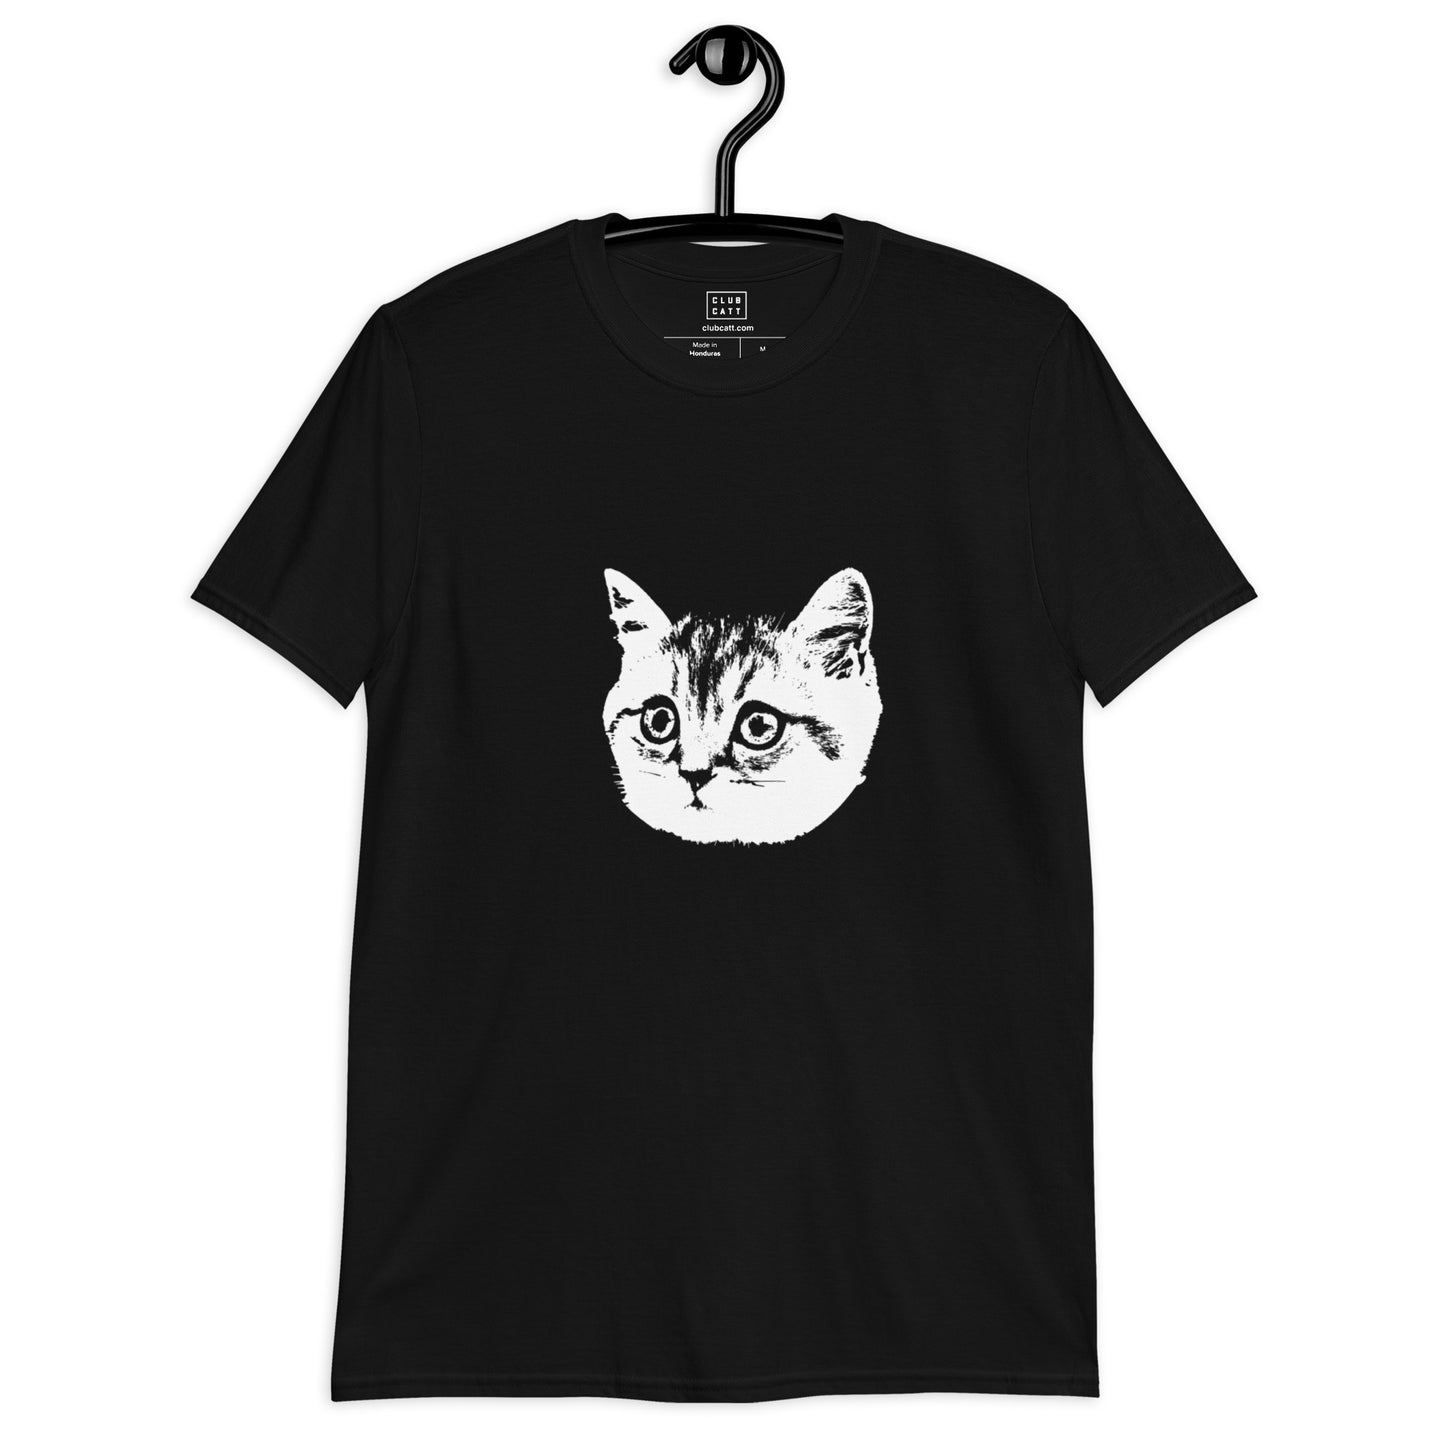 DANDELION Cat on T-Shirt